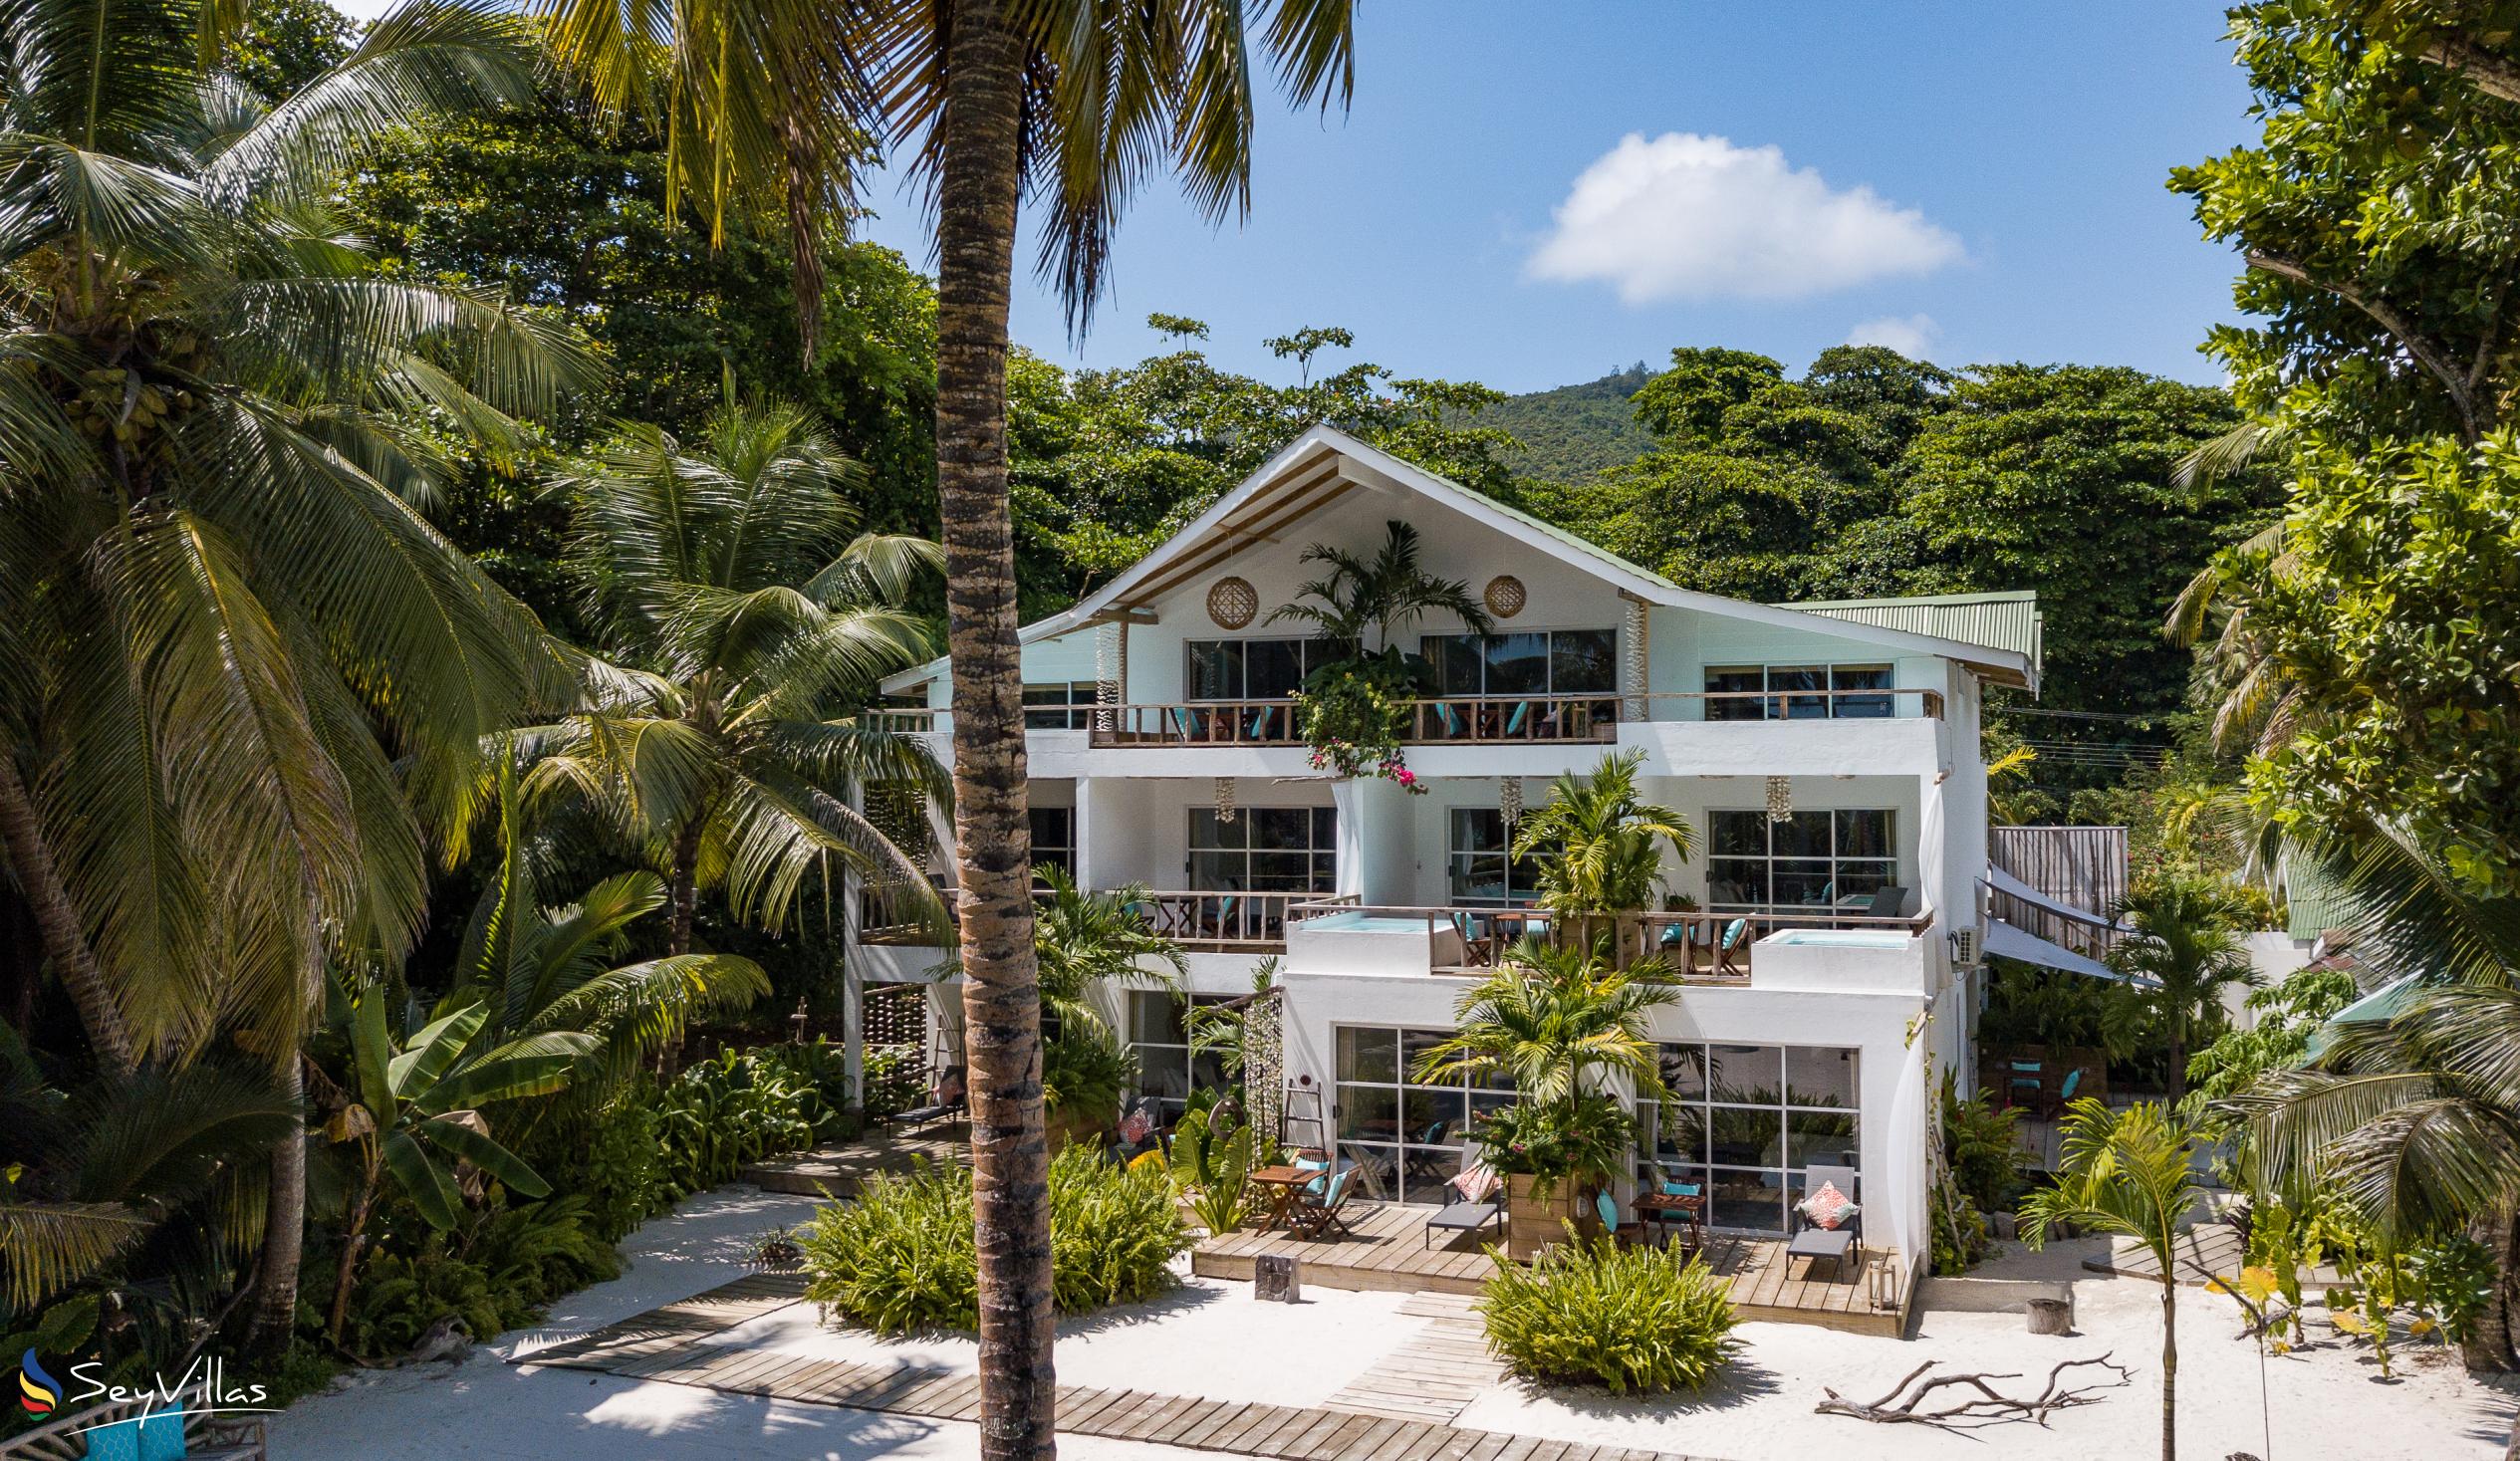 Photo 107: Bliss Hotel Praslin - Beach House - Beach Penthouse - Praslin (Seychelles)